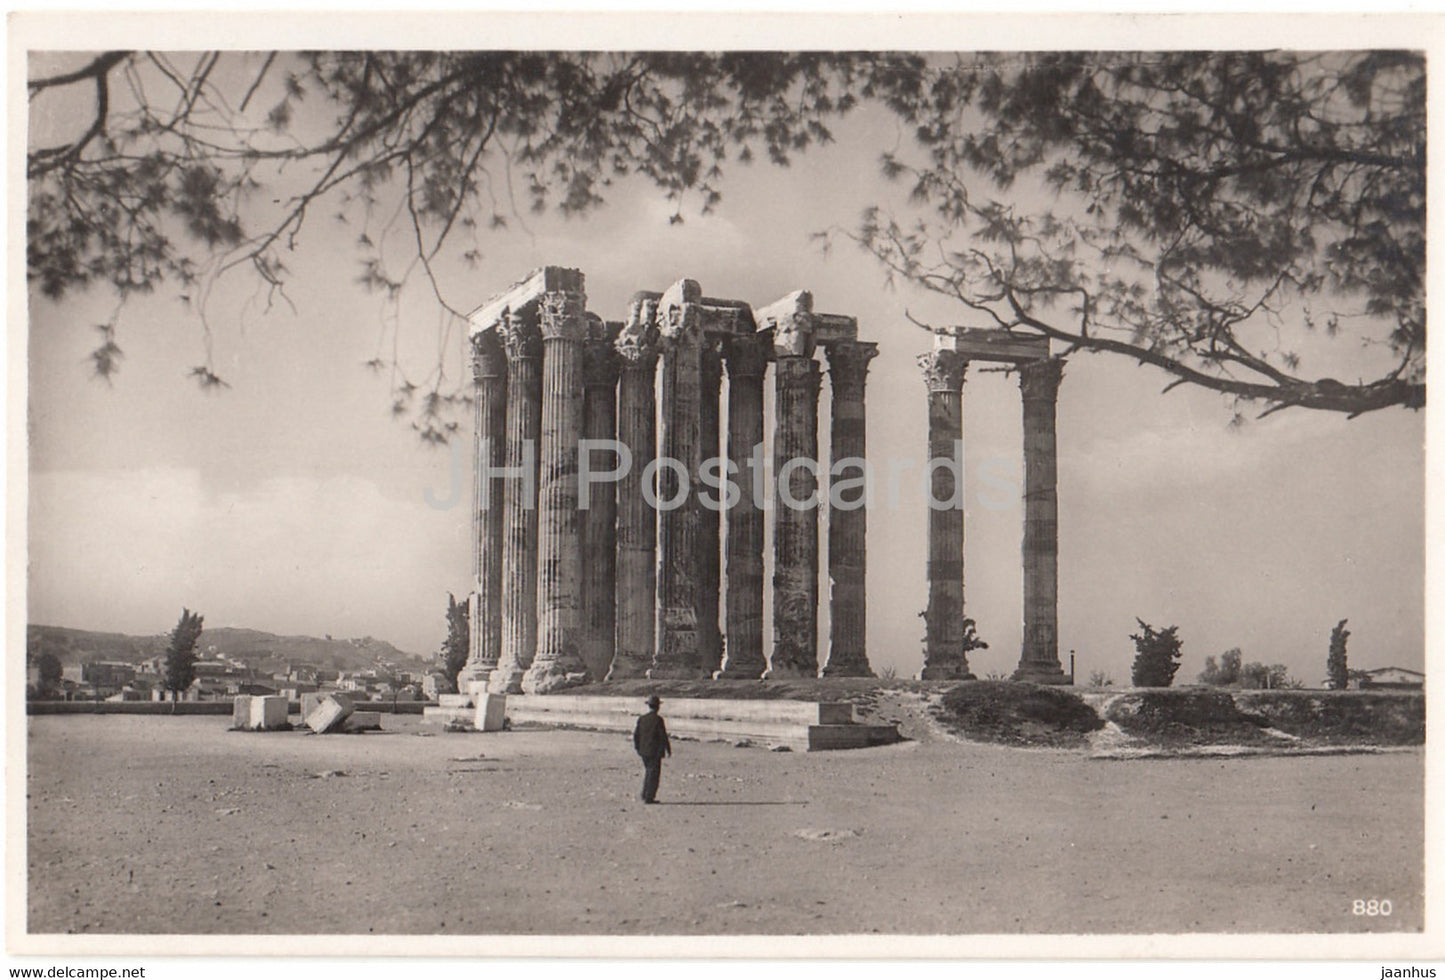 Athens - Athen - Olympieion - 880 - old postcard - Greece - unused - JH Postcards